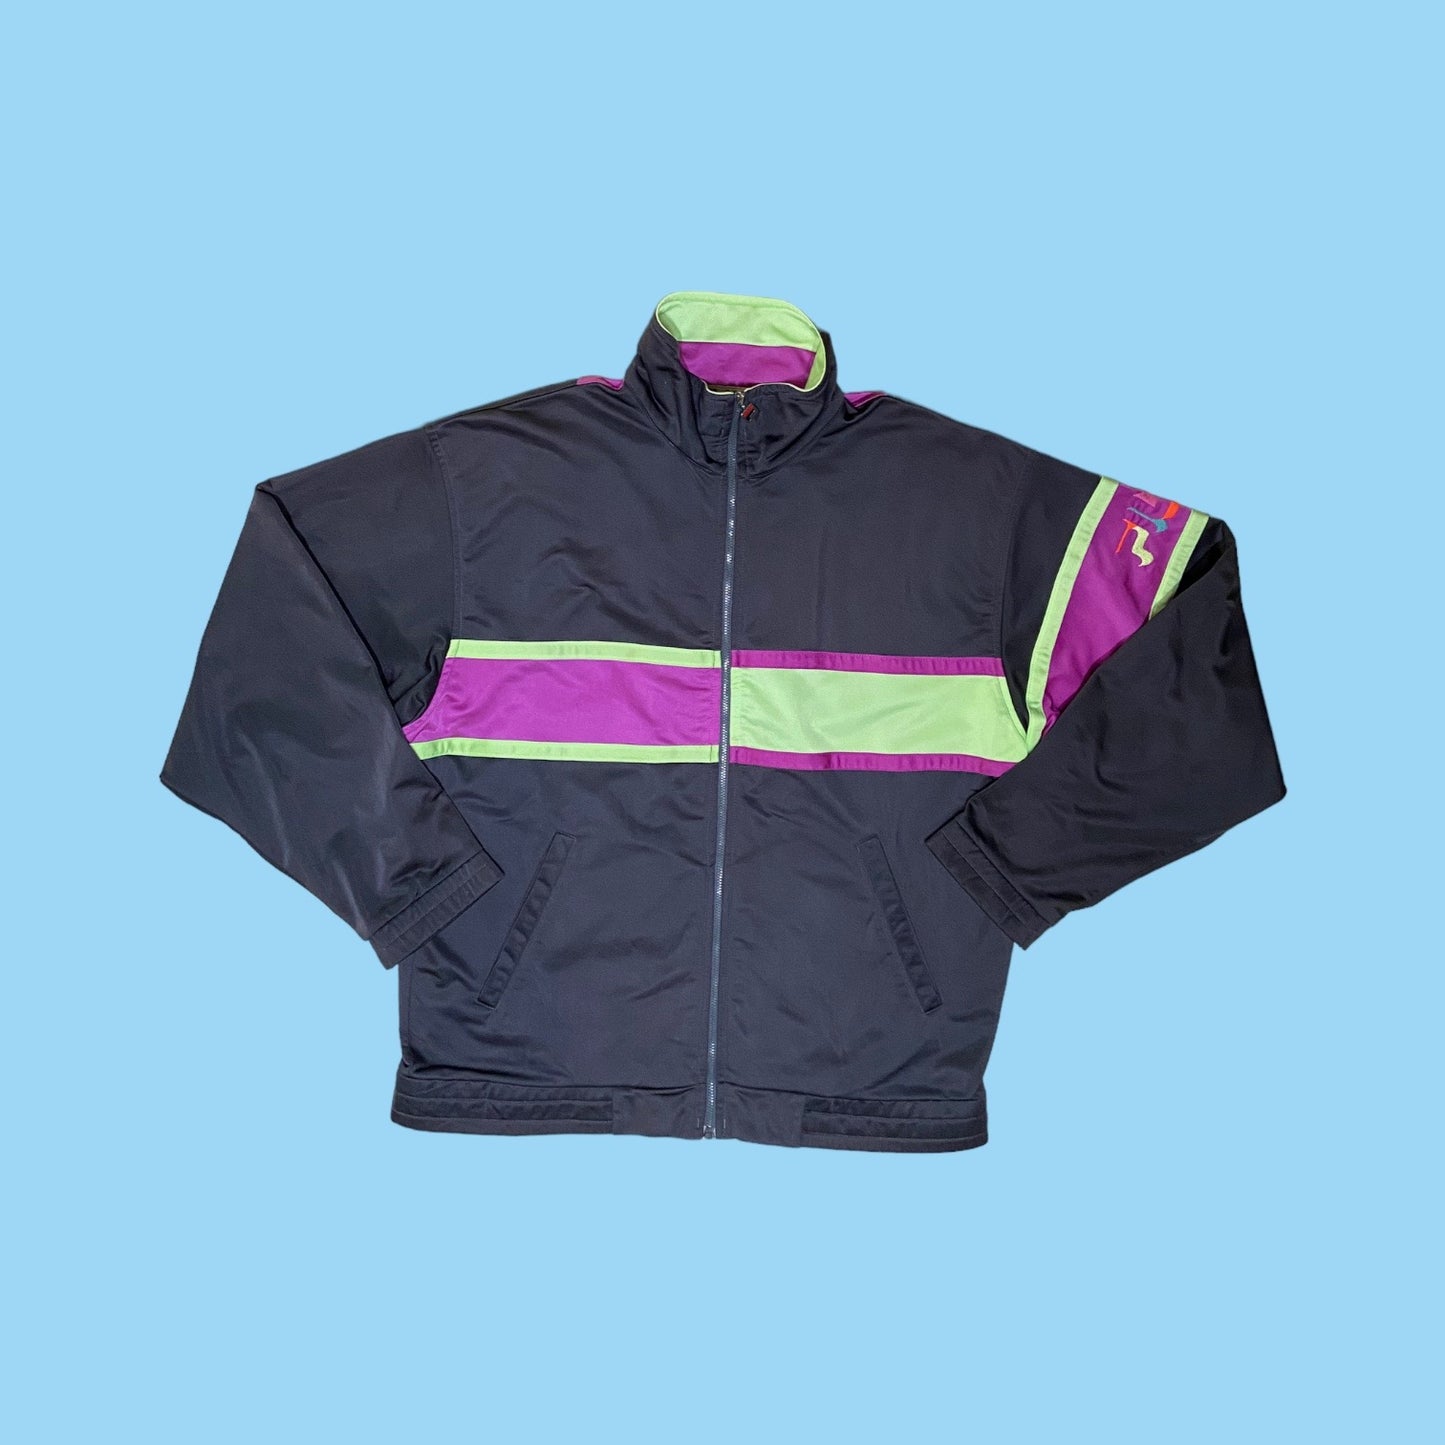 Vintage Fila track jacket - L